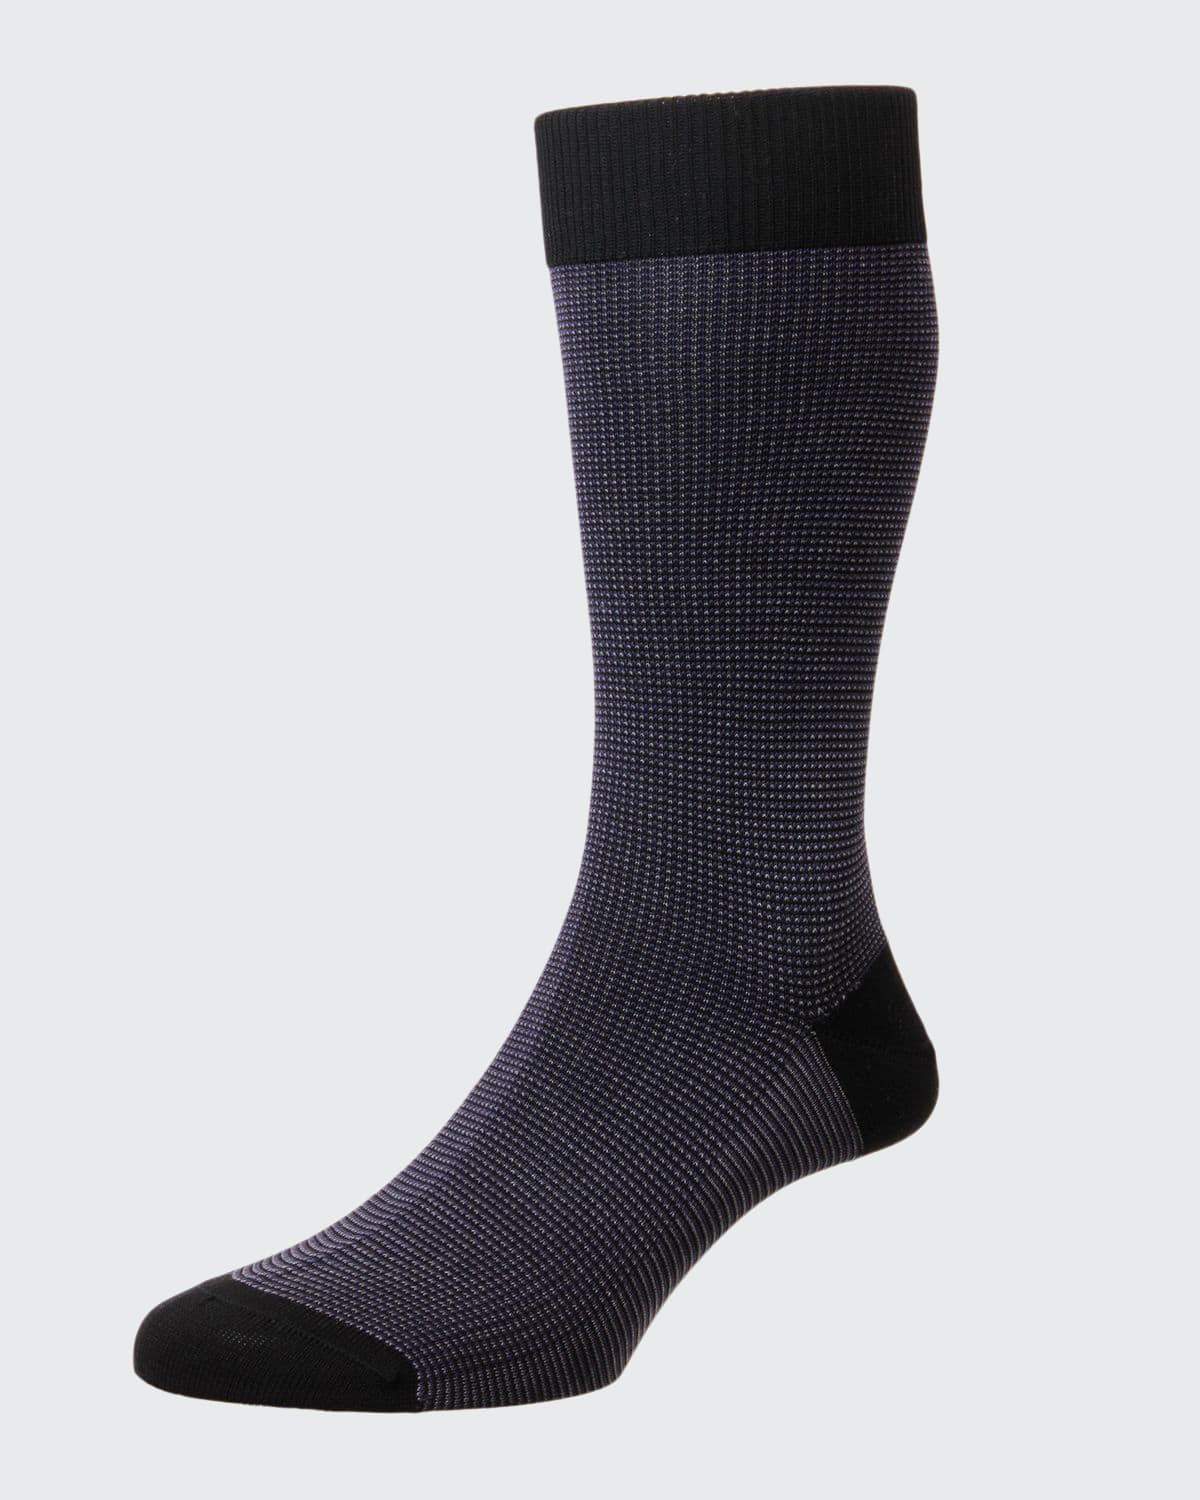 Mid-Calf Birdseye Ankle Socks, Black